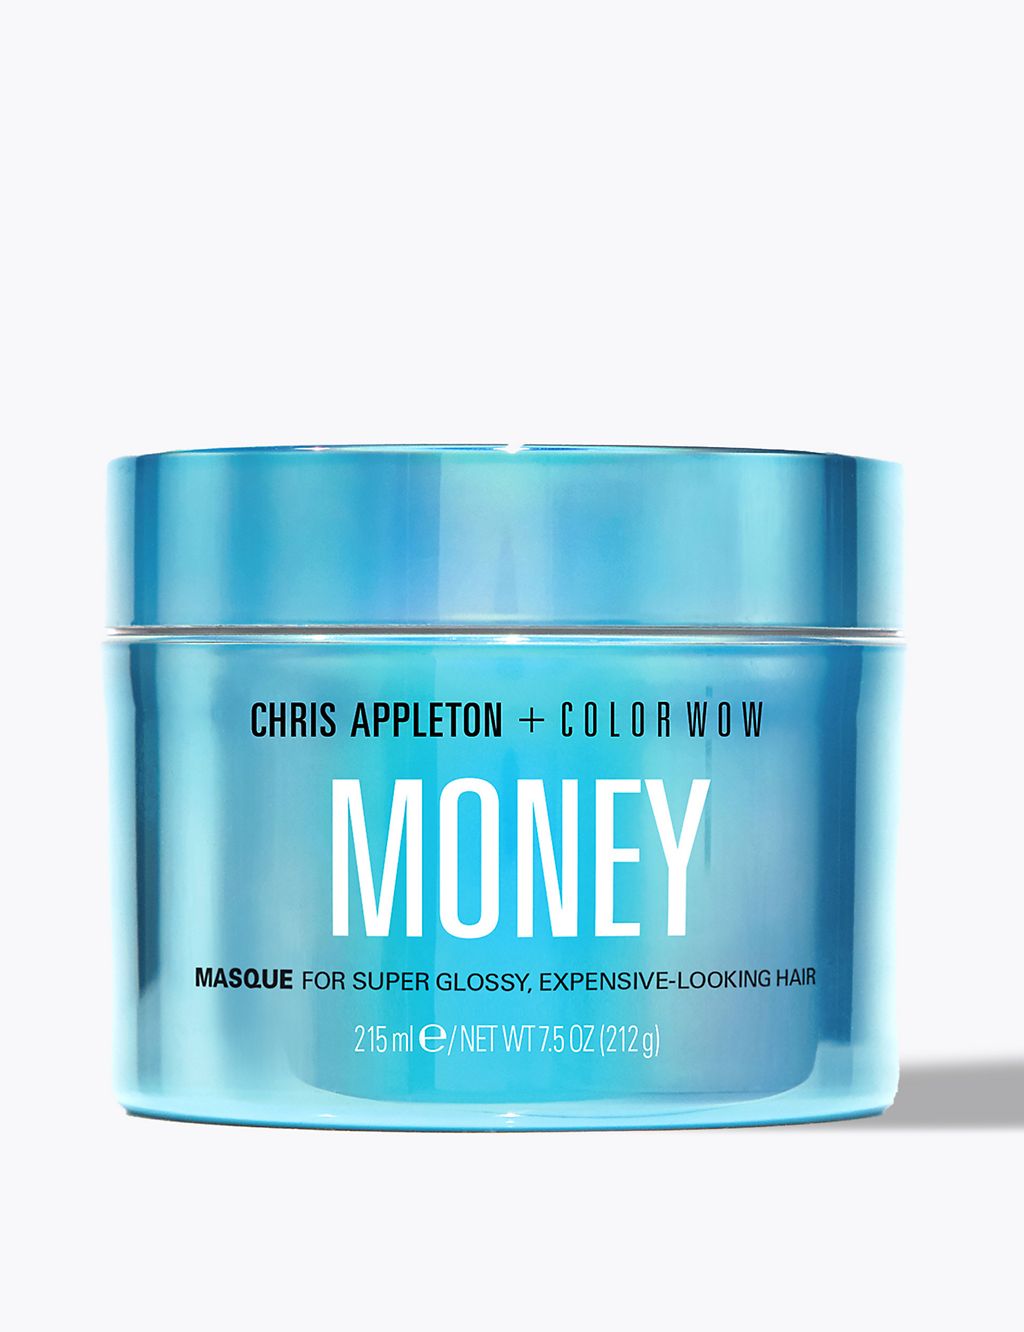 Chris Appleton + Color Wow Money Masque 215ml 3 of 5